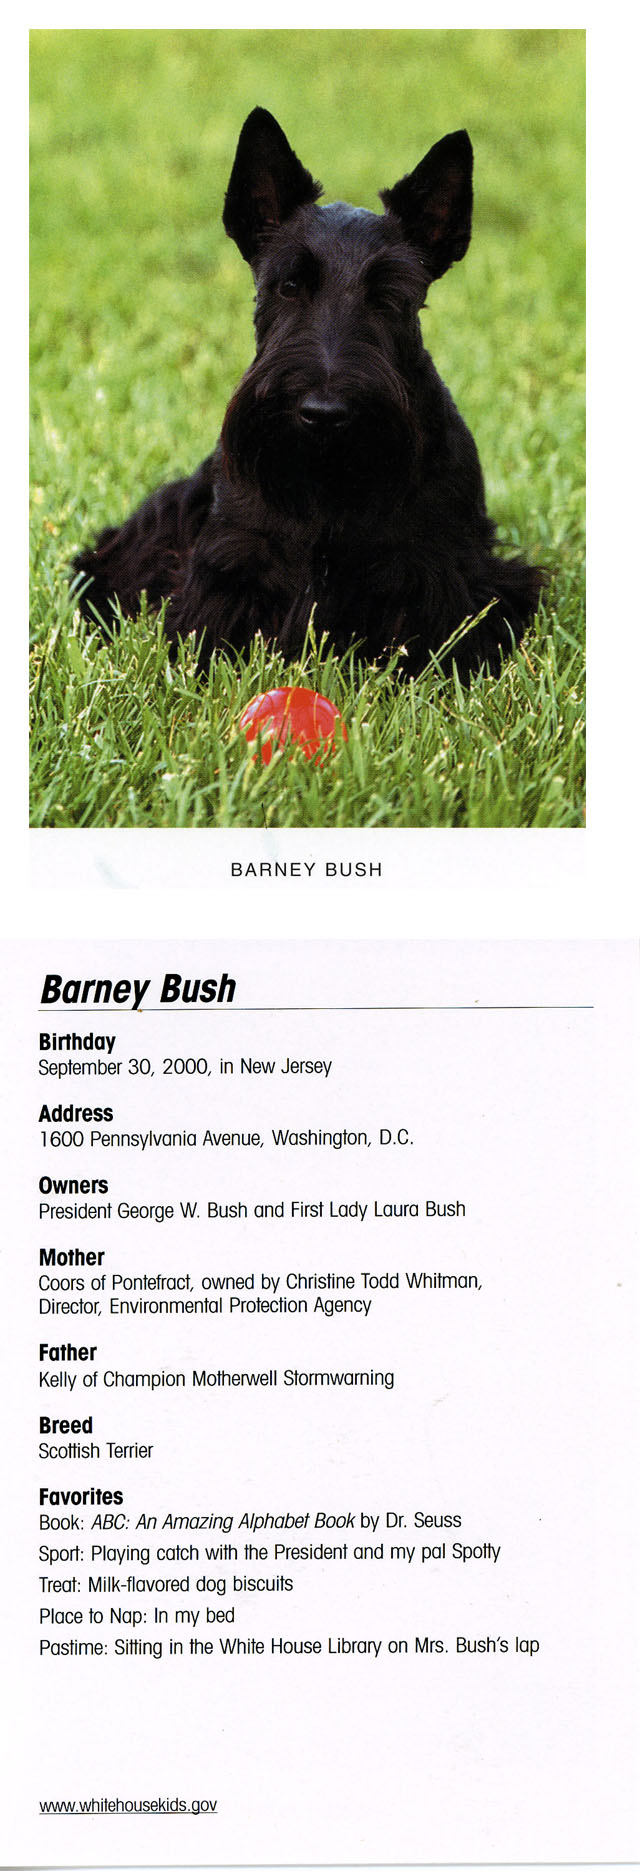 Barney Bush